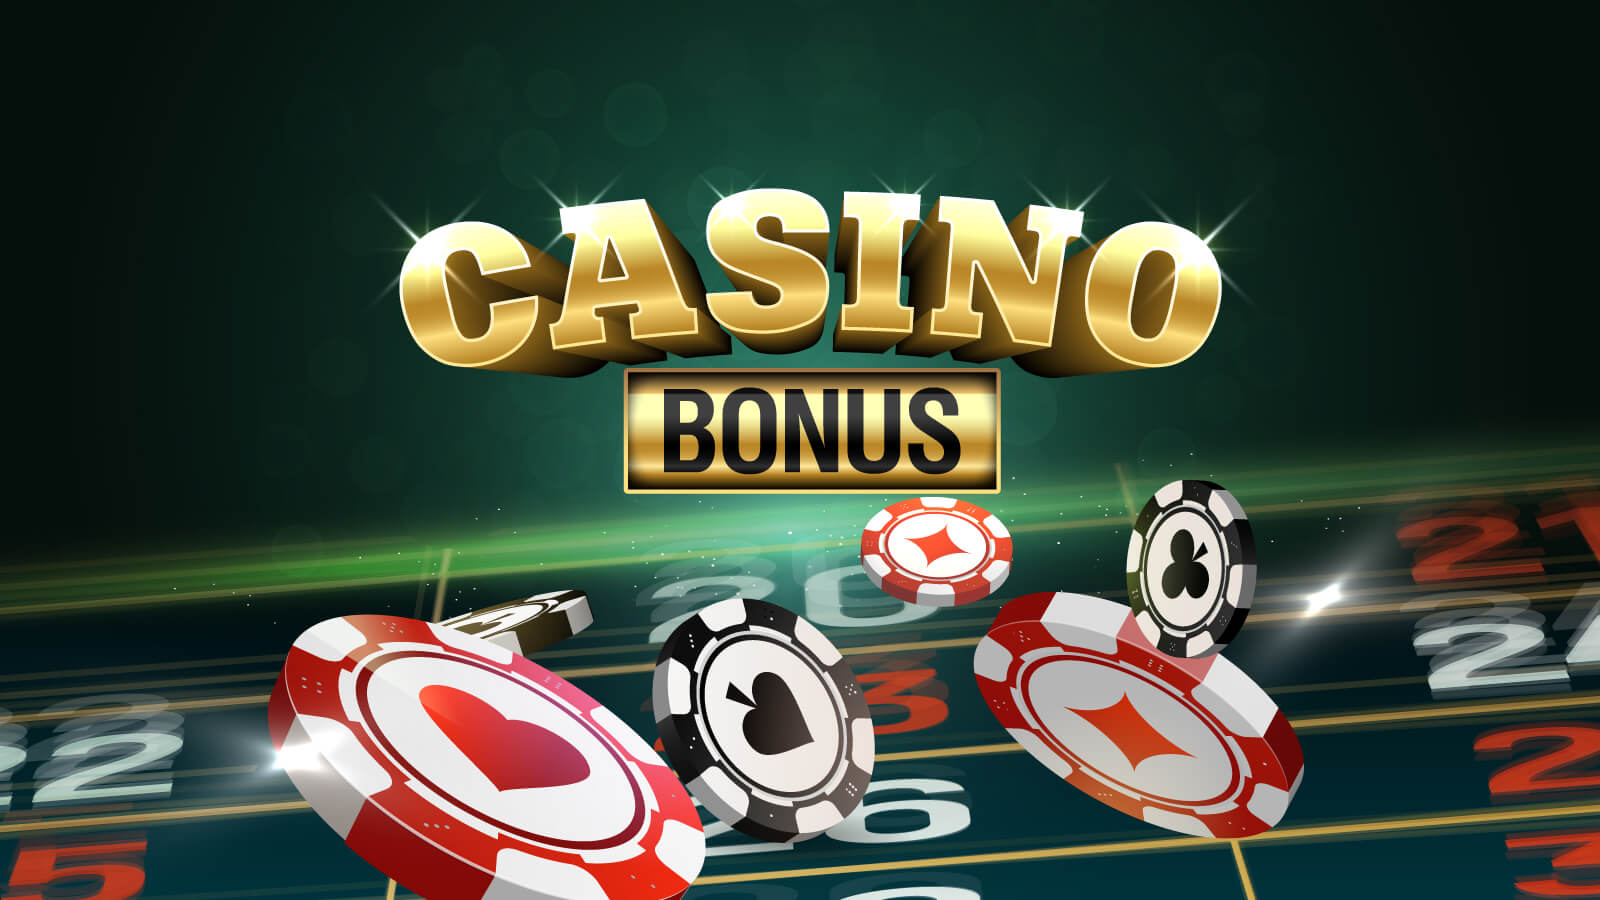 Free Online Casino No Deposit Bonus UK